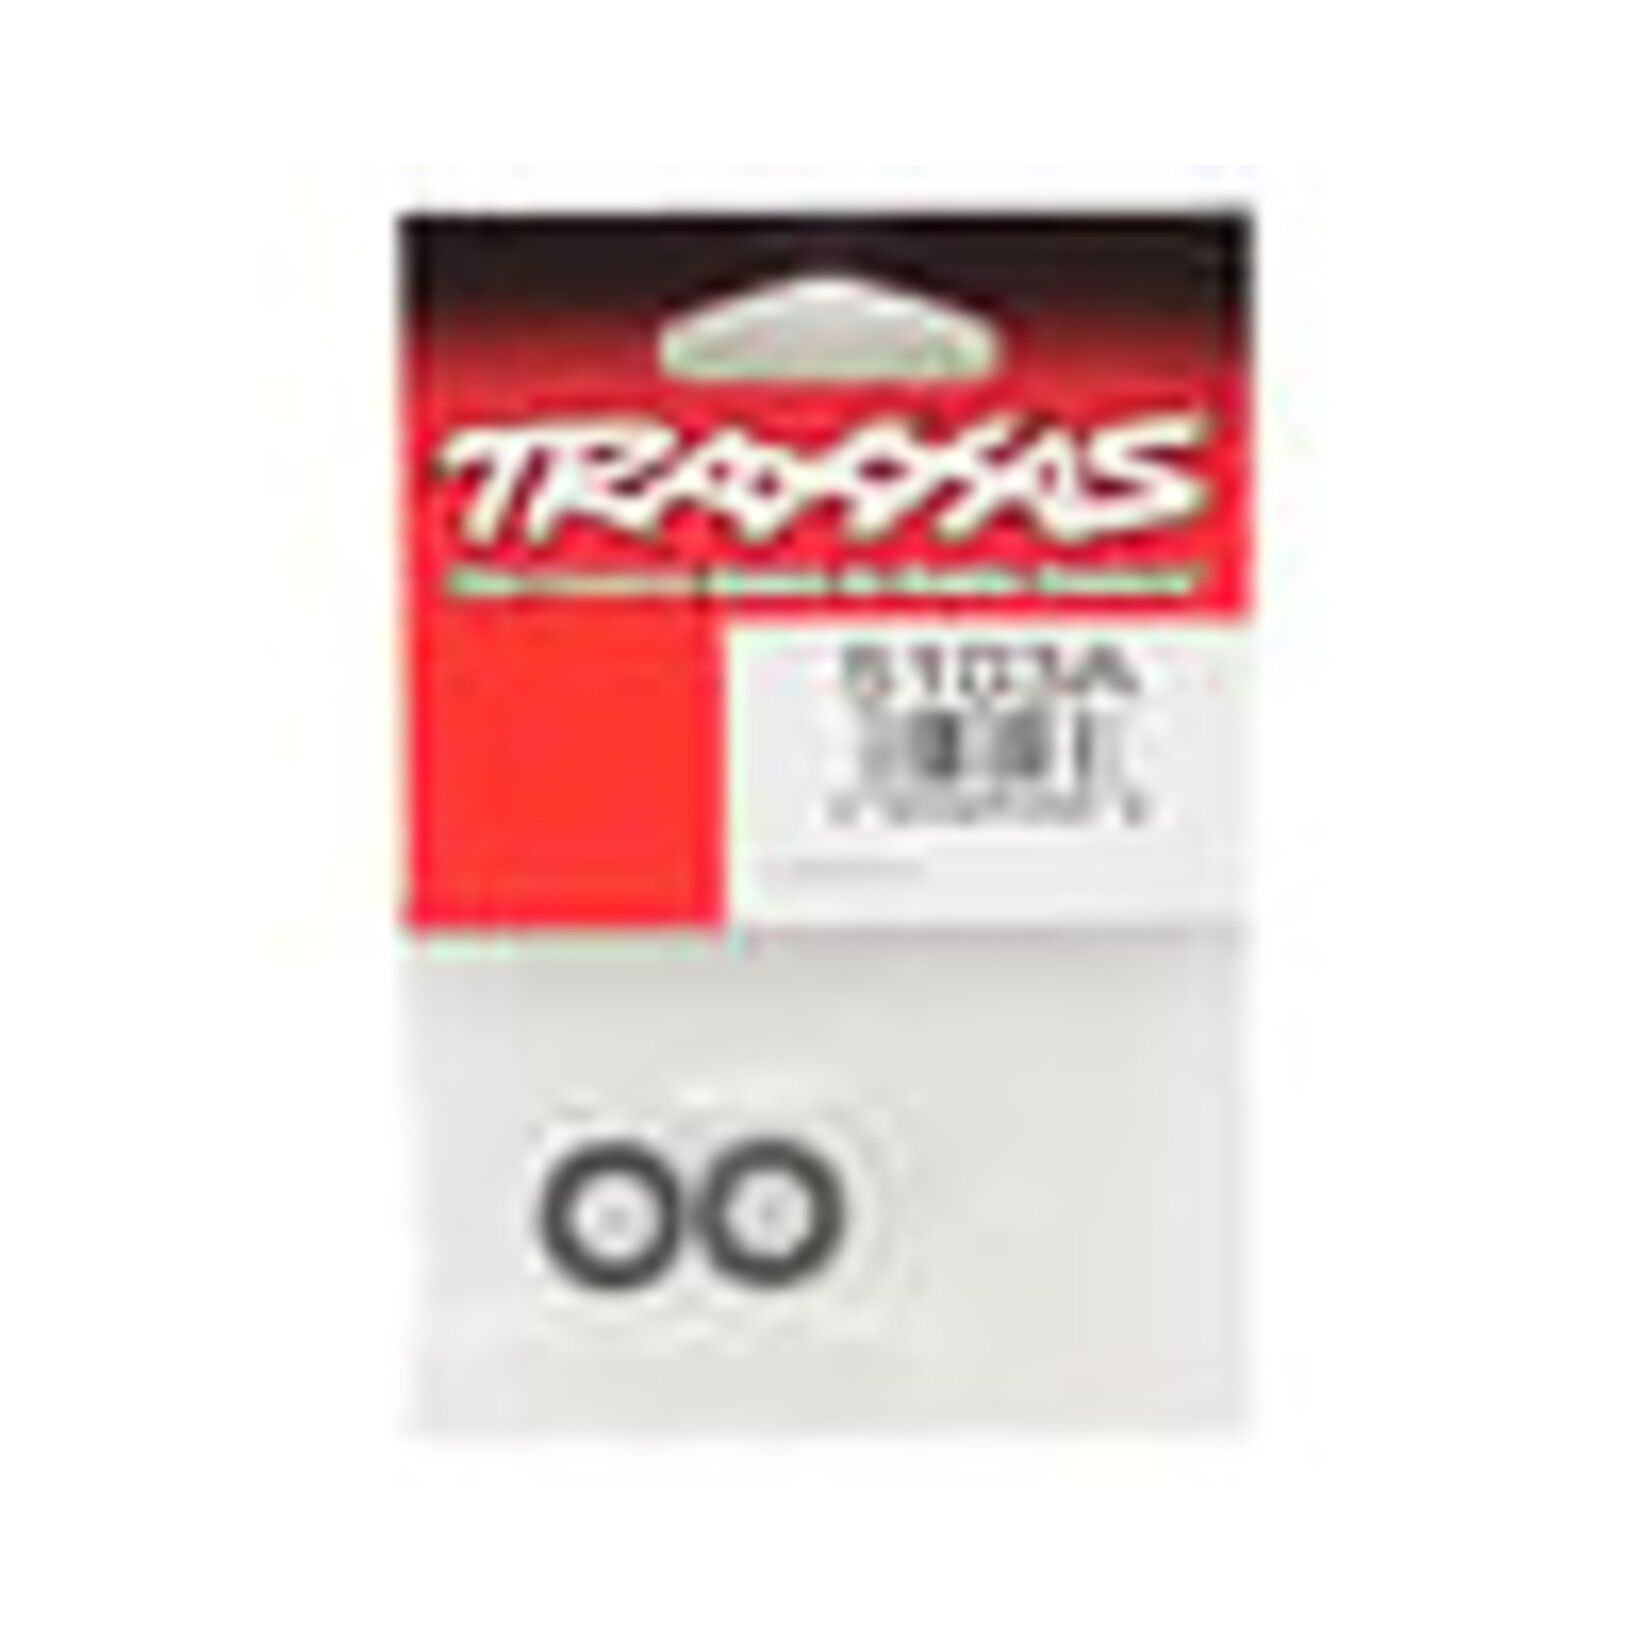 Traxxas Traxxas Ball bearings, black rubber sealed (7x14x5mm) (2) #5103A